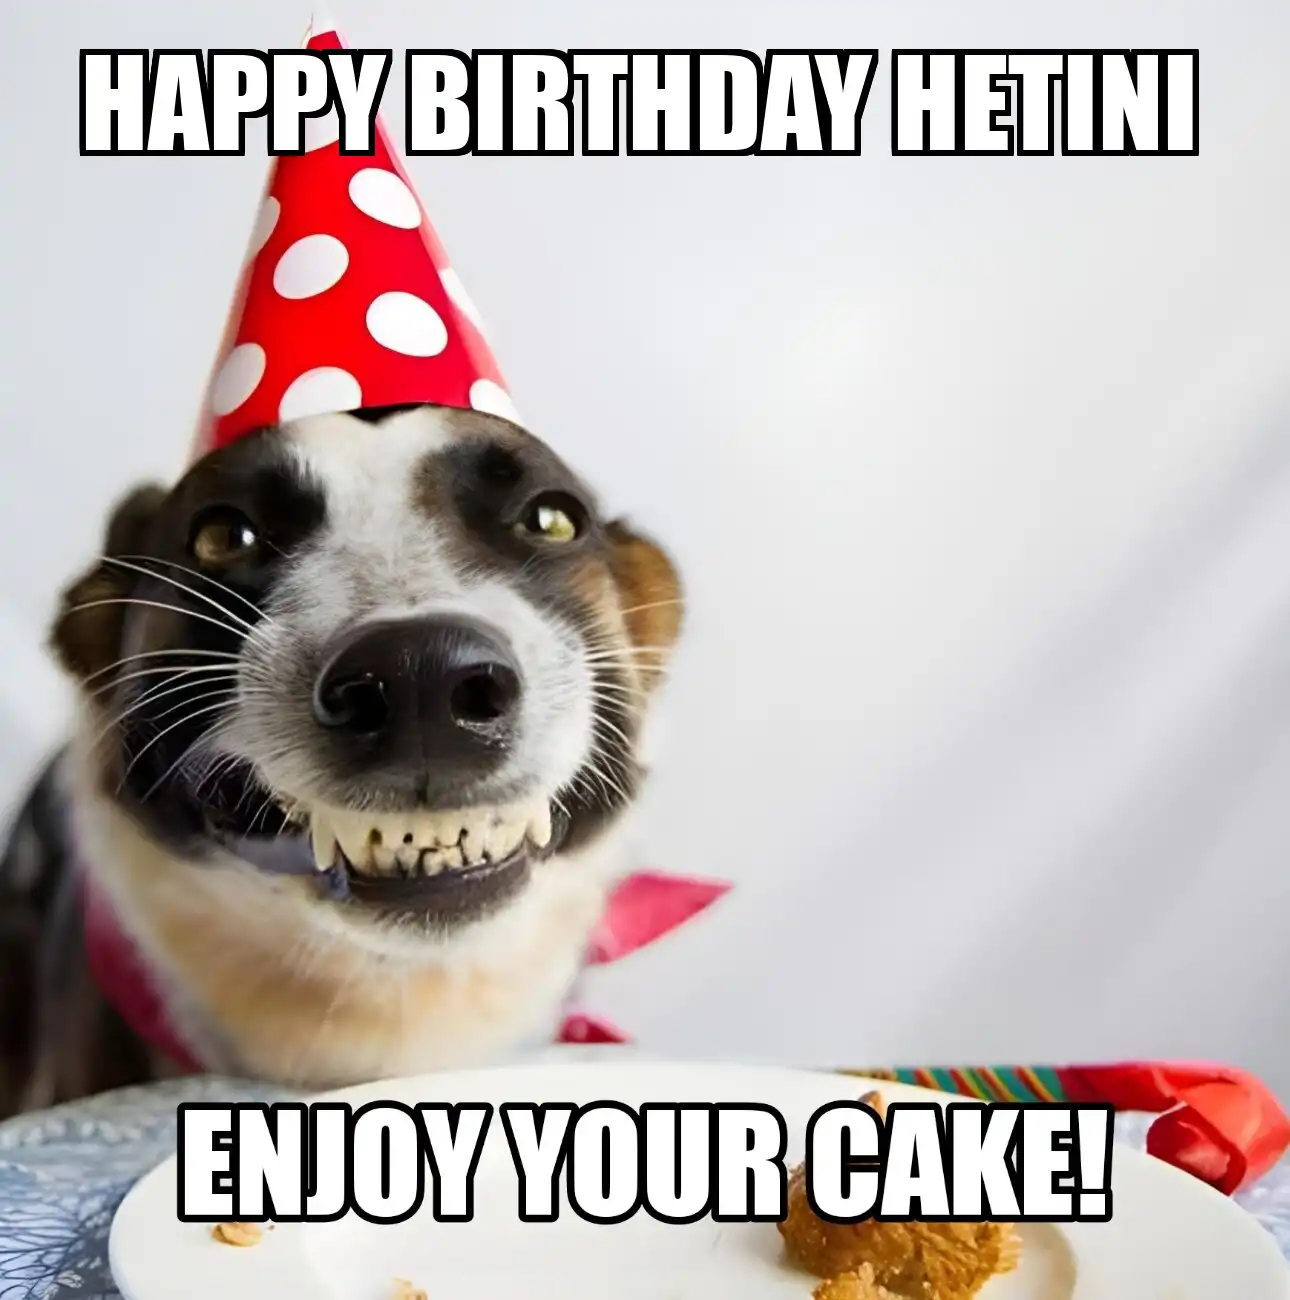 Happy Birthday Hetini Enjoy Your Cake Dog Meme